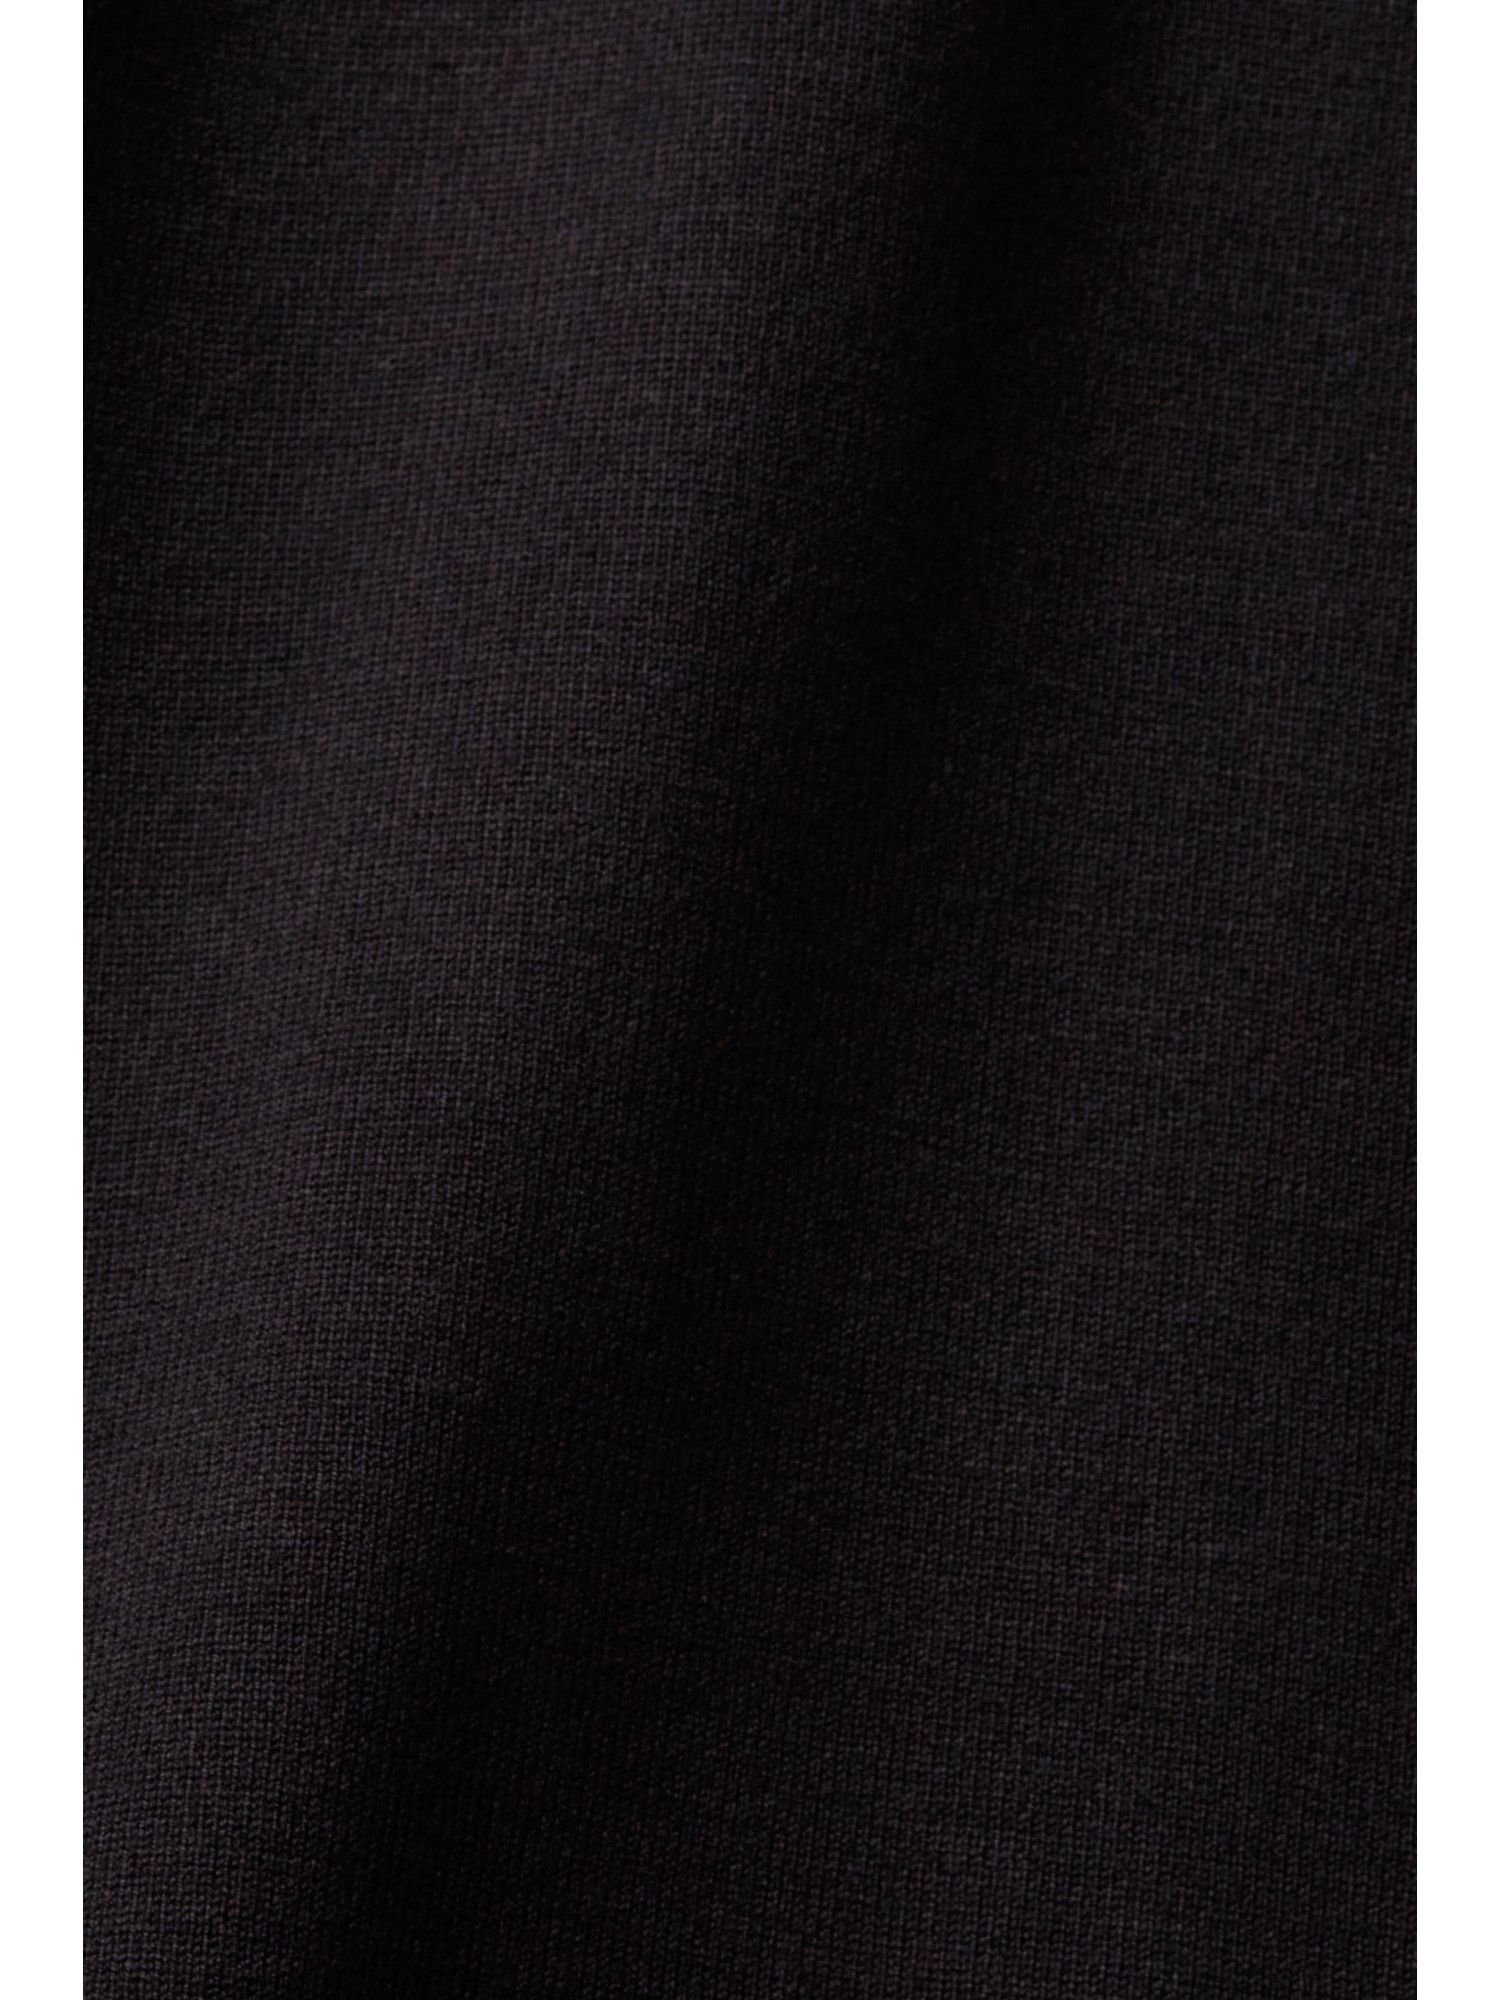 Esprit Collection Minikleid Strick aus BLACK Minikleid